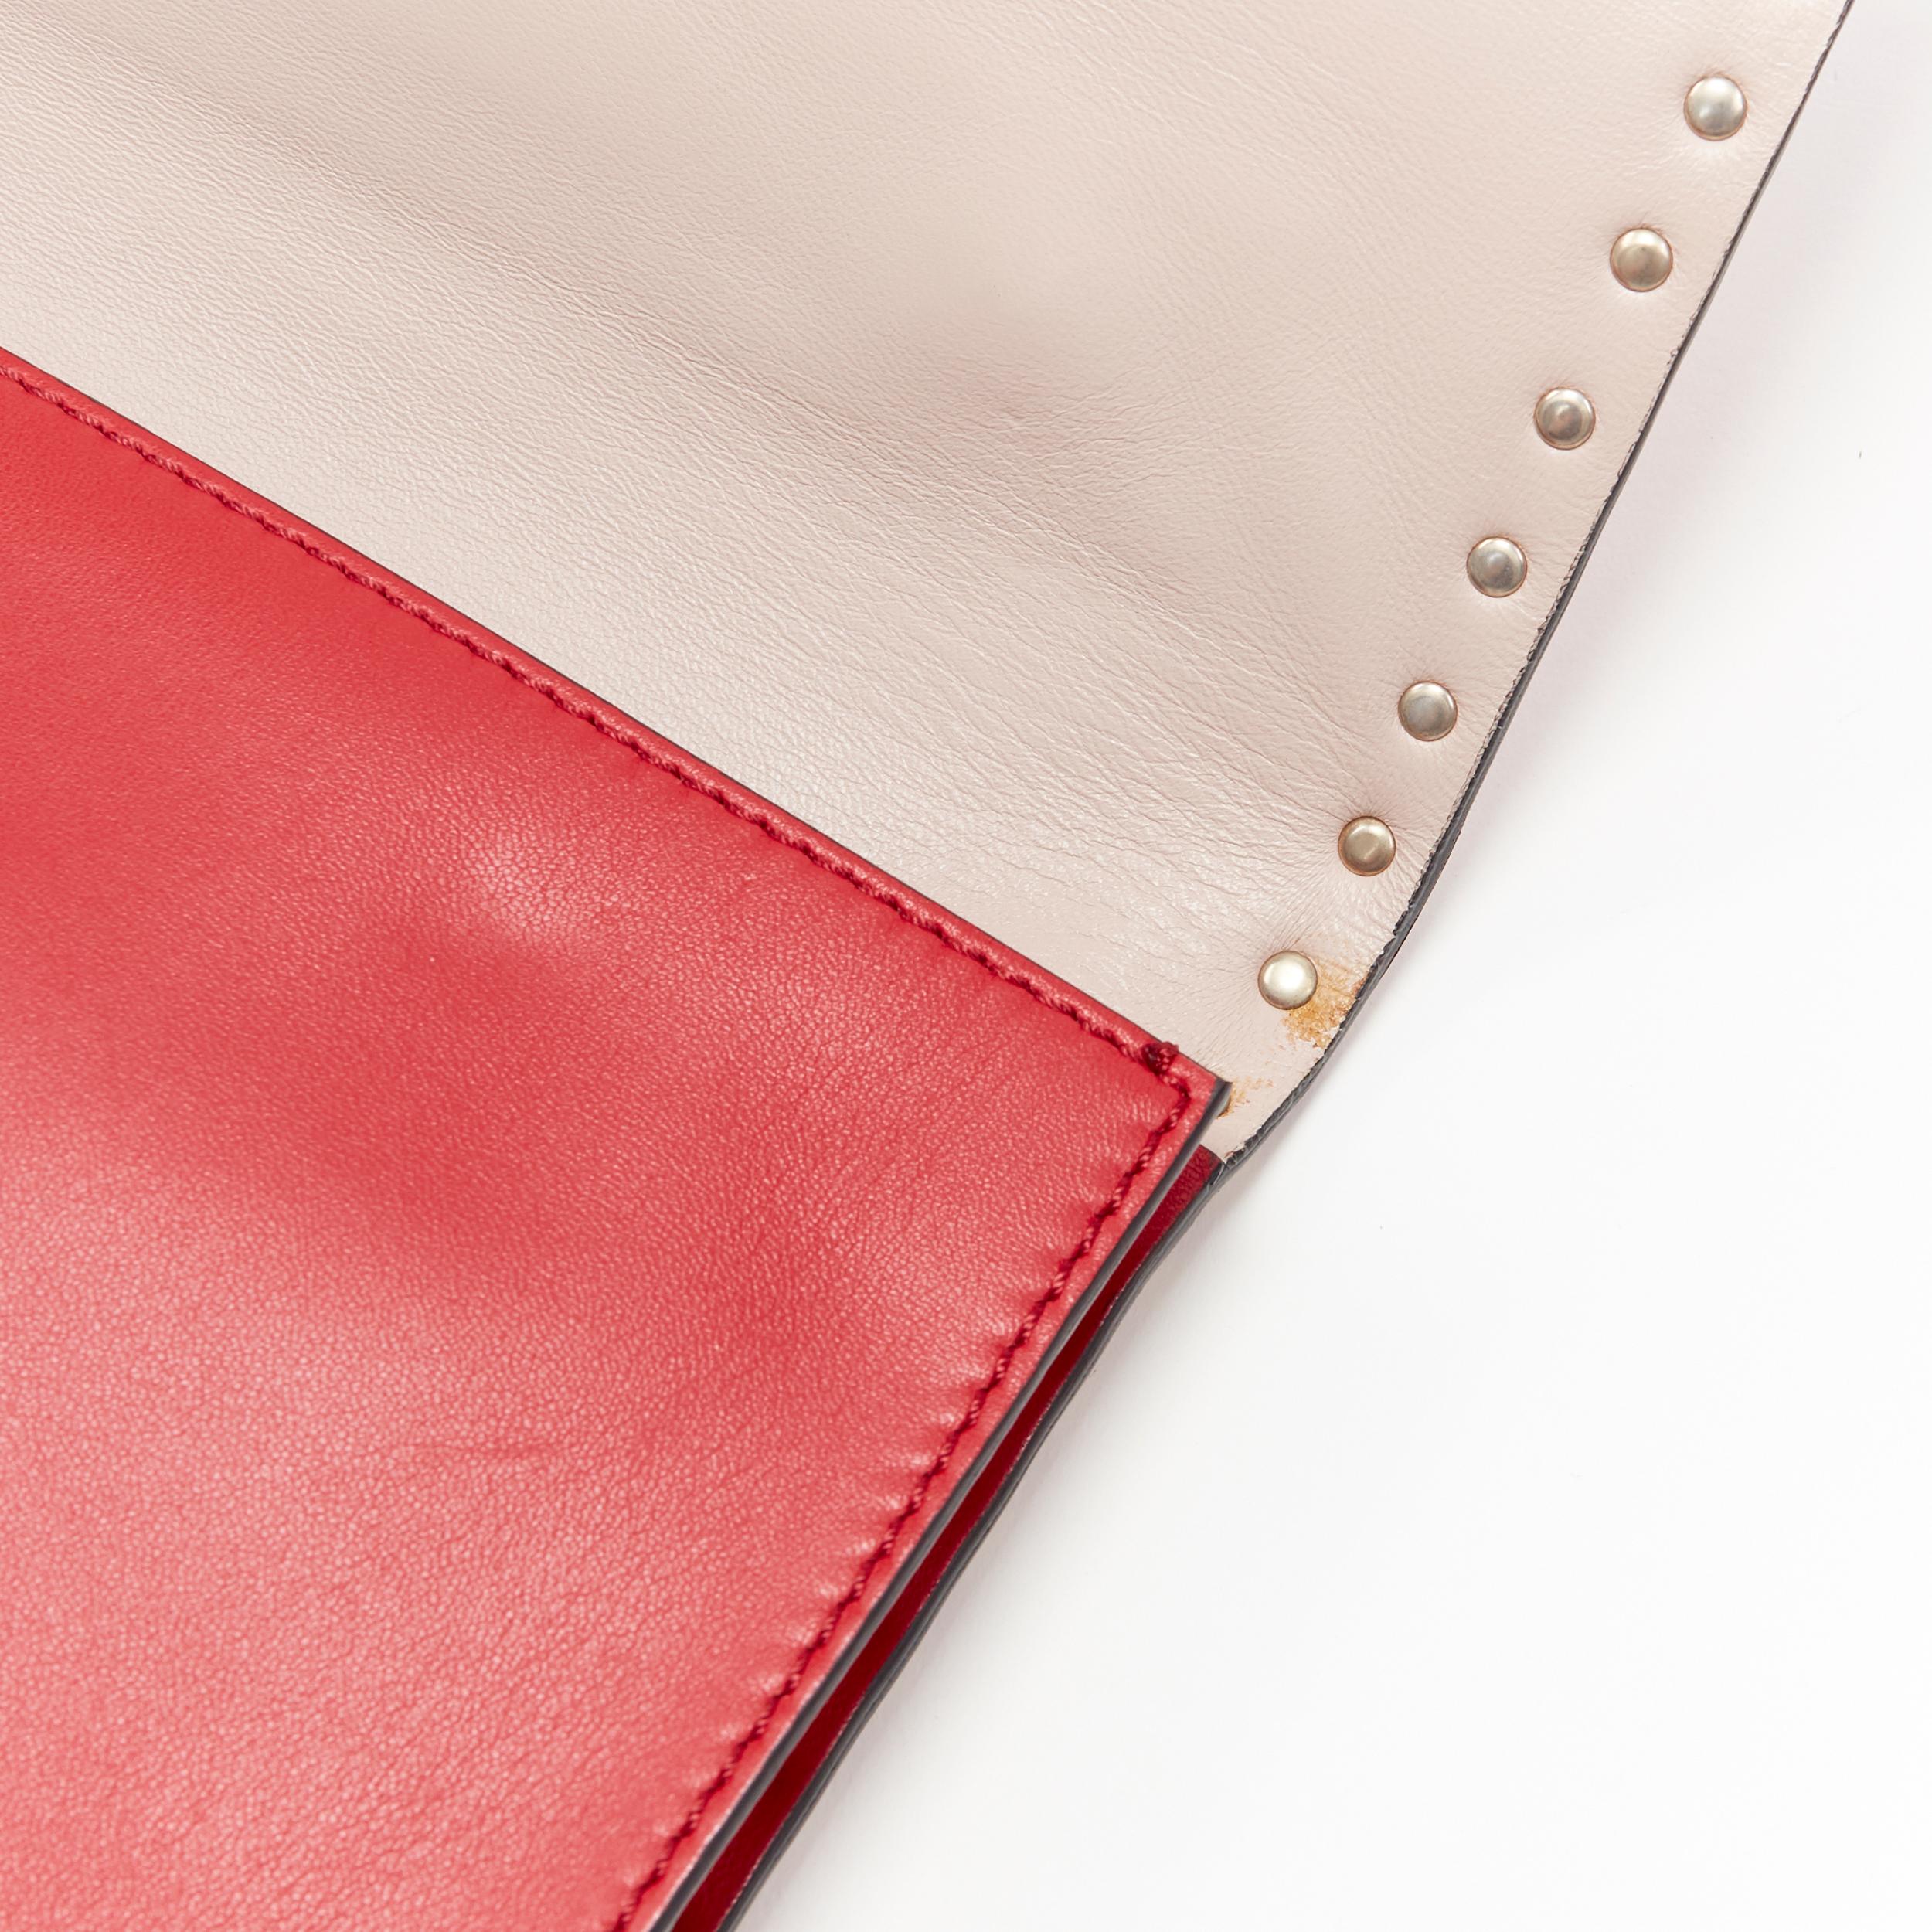 VALENTINO Rockstud red leather gold studded bordered wristlet flap clutch bag 3